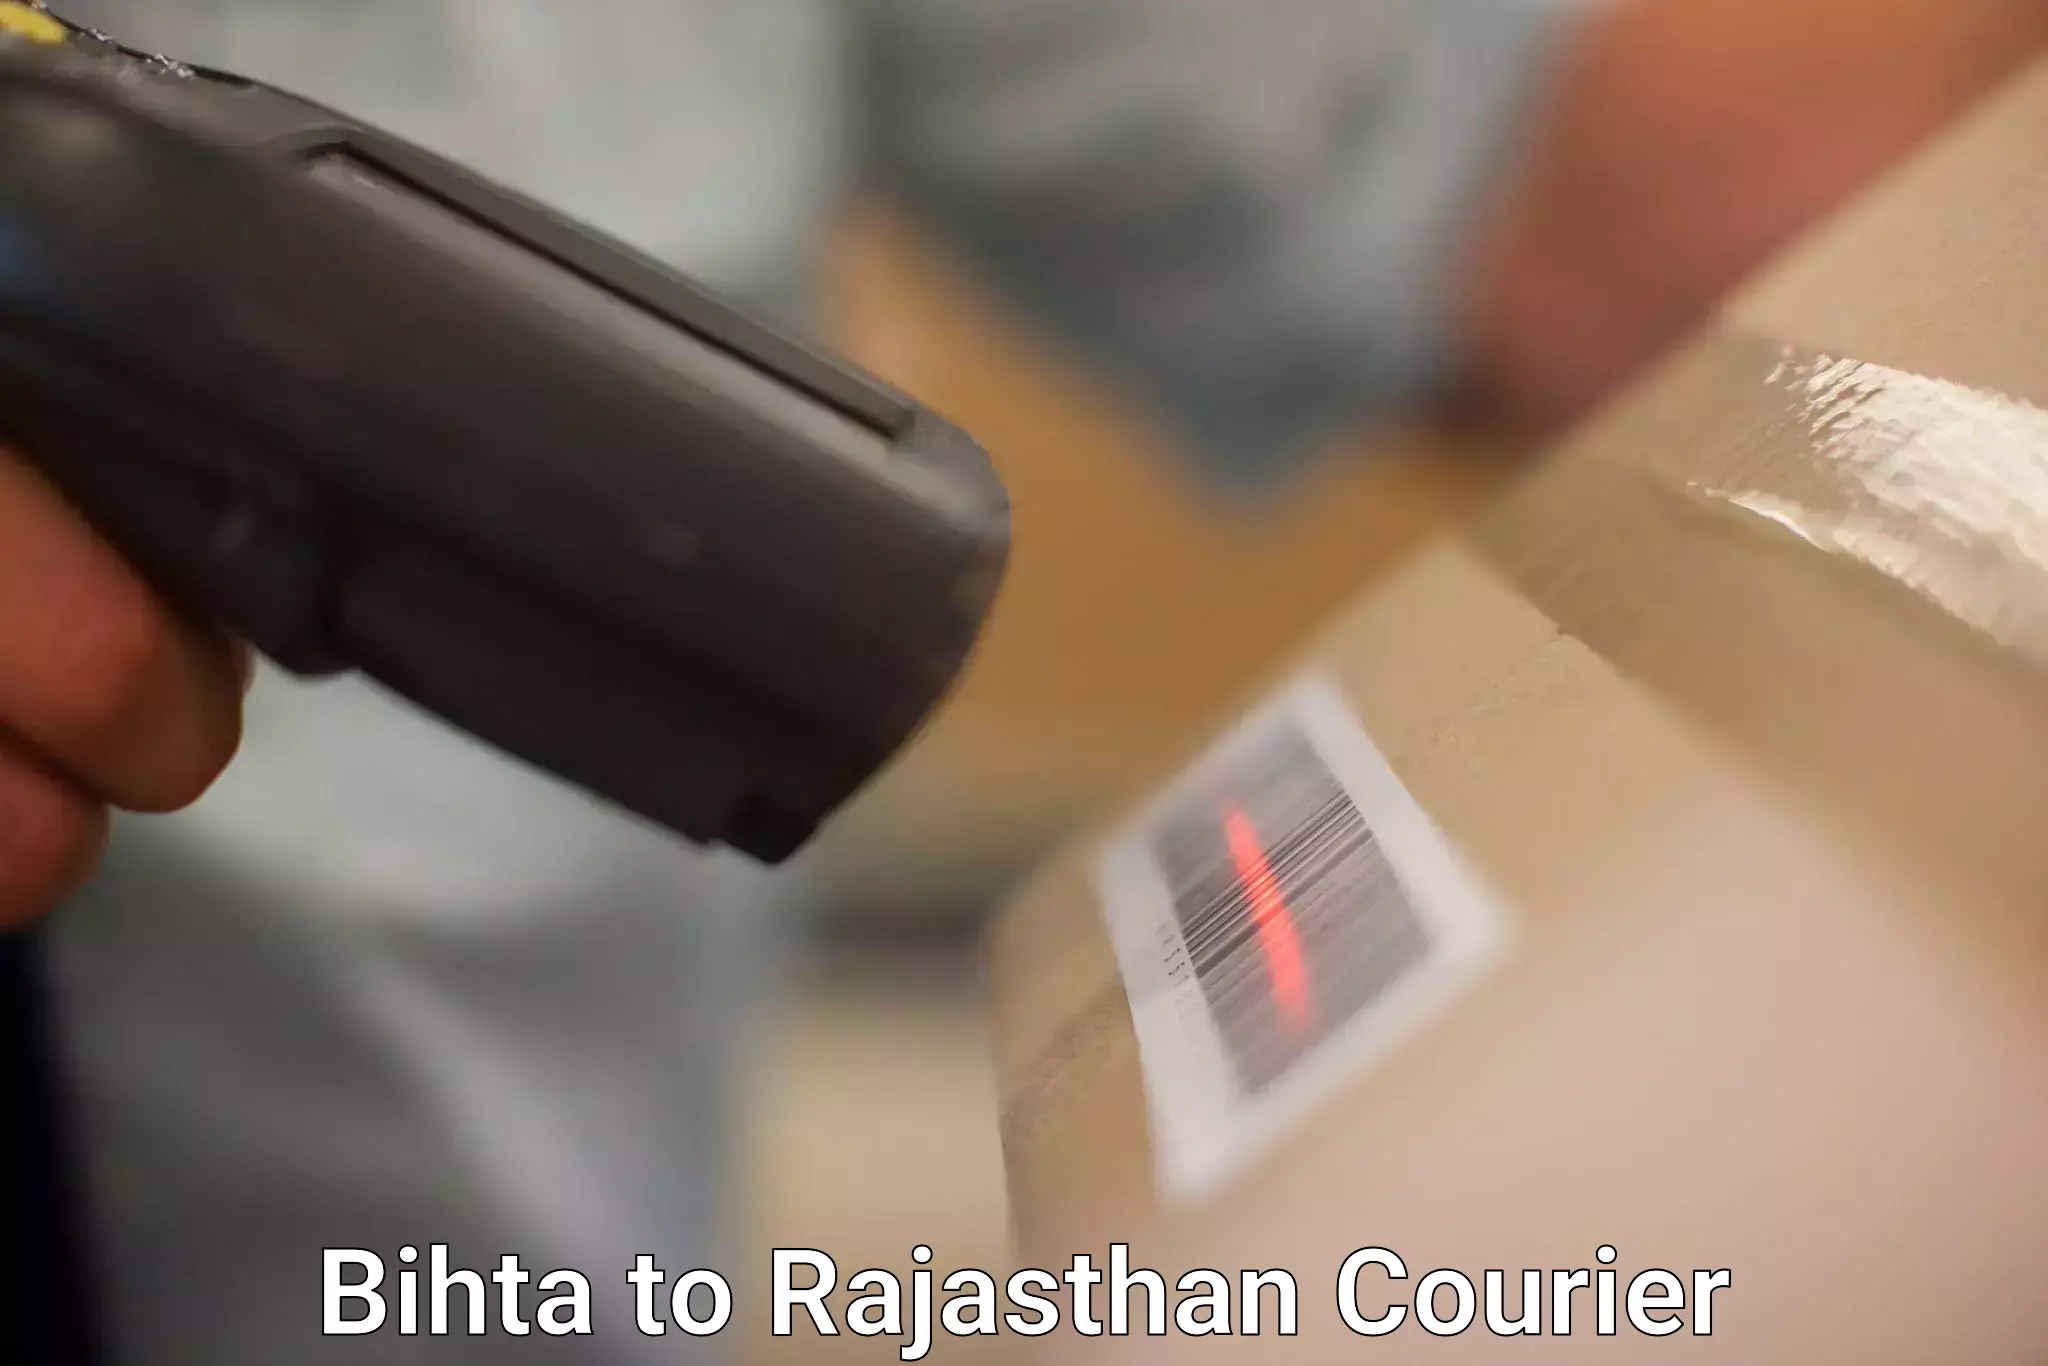 Professional courier handling Bihta to Alwar